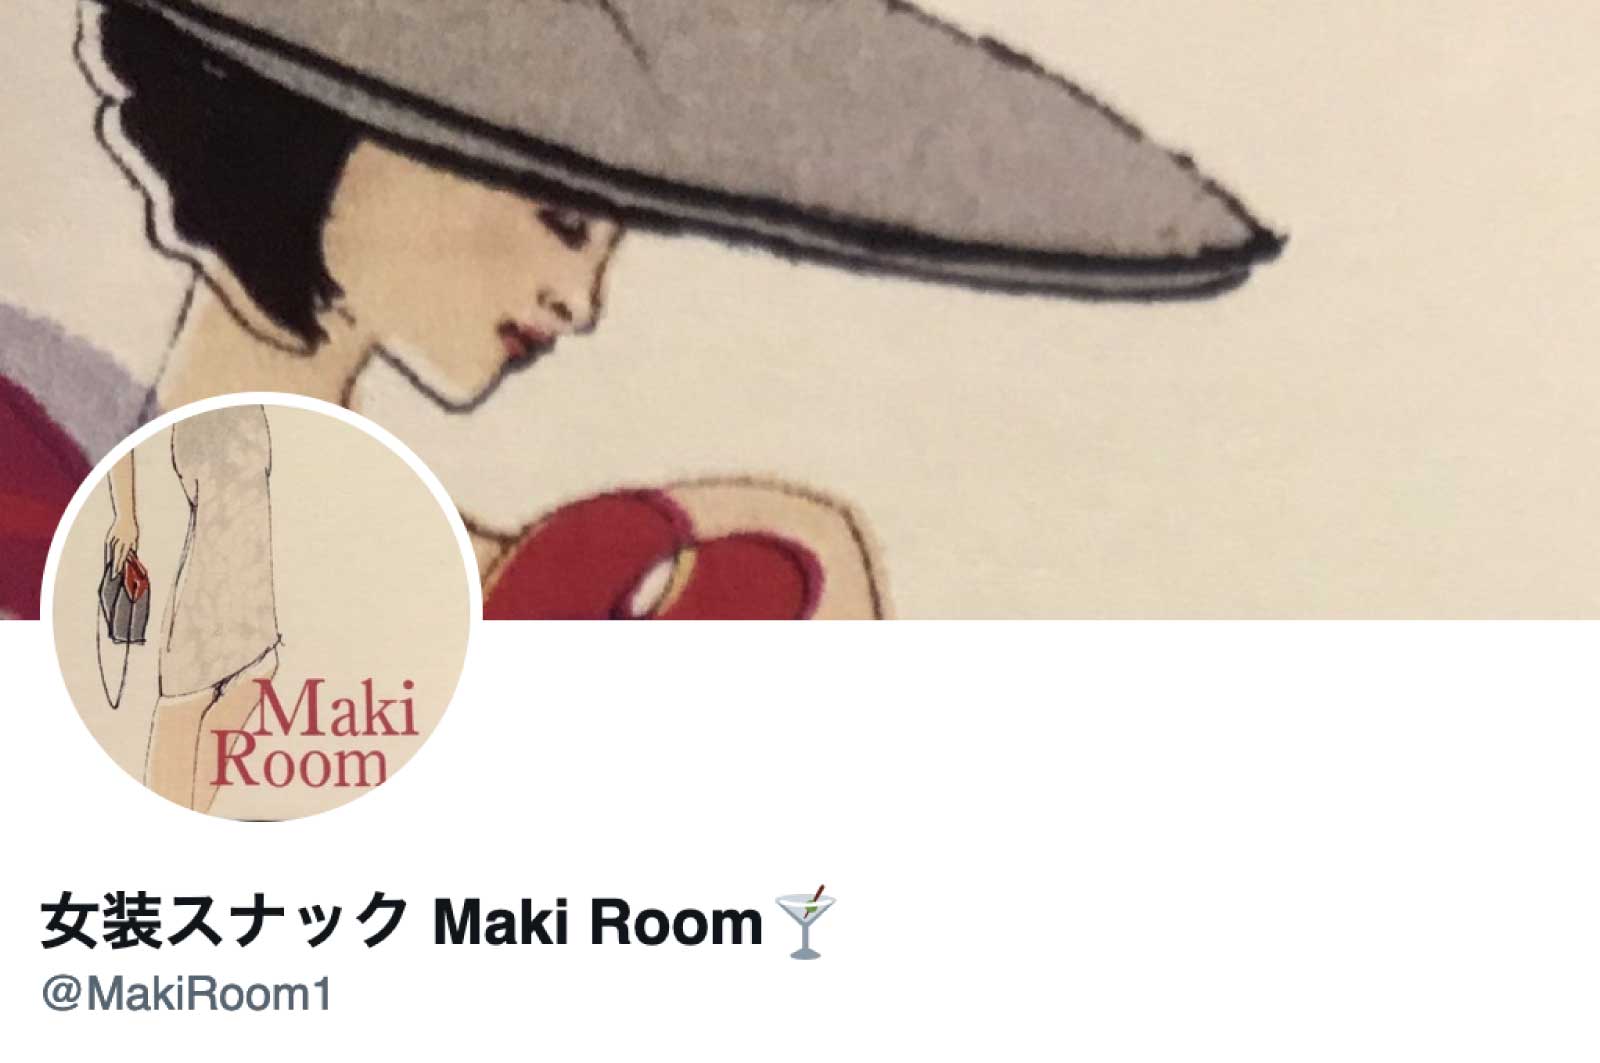 Maki Room